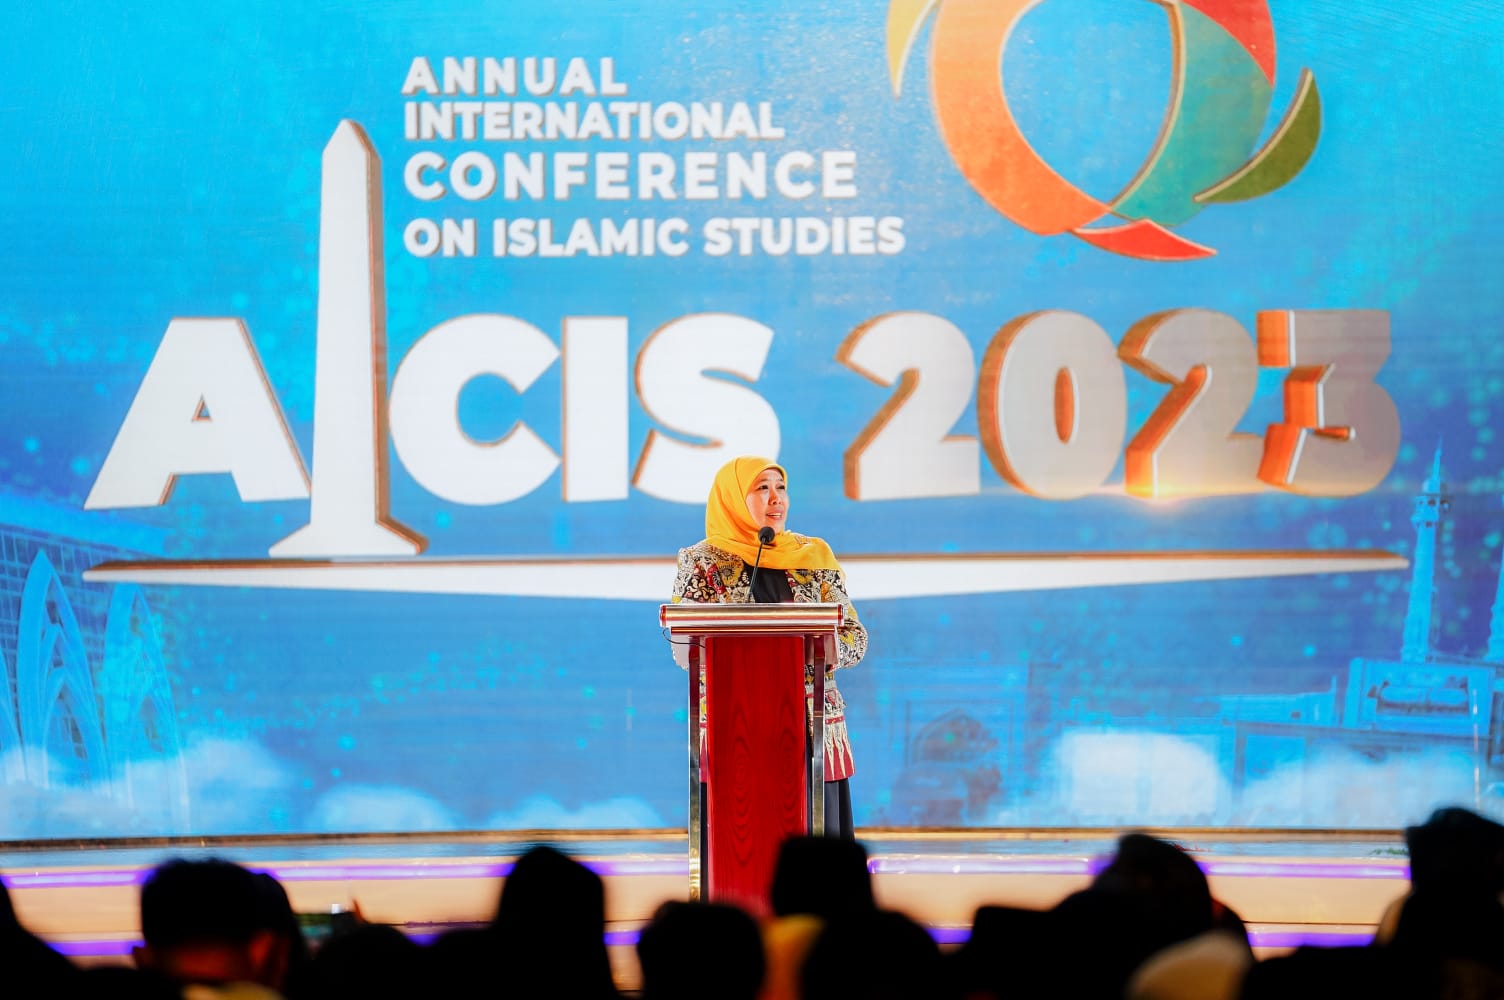 Forum AICIS 2023, Pertemuan Budaya dan Pemikiran untuk Perdamaian, Keharmonisan dan Kesejahteraan